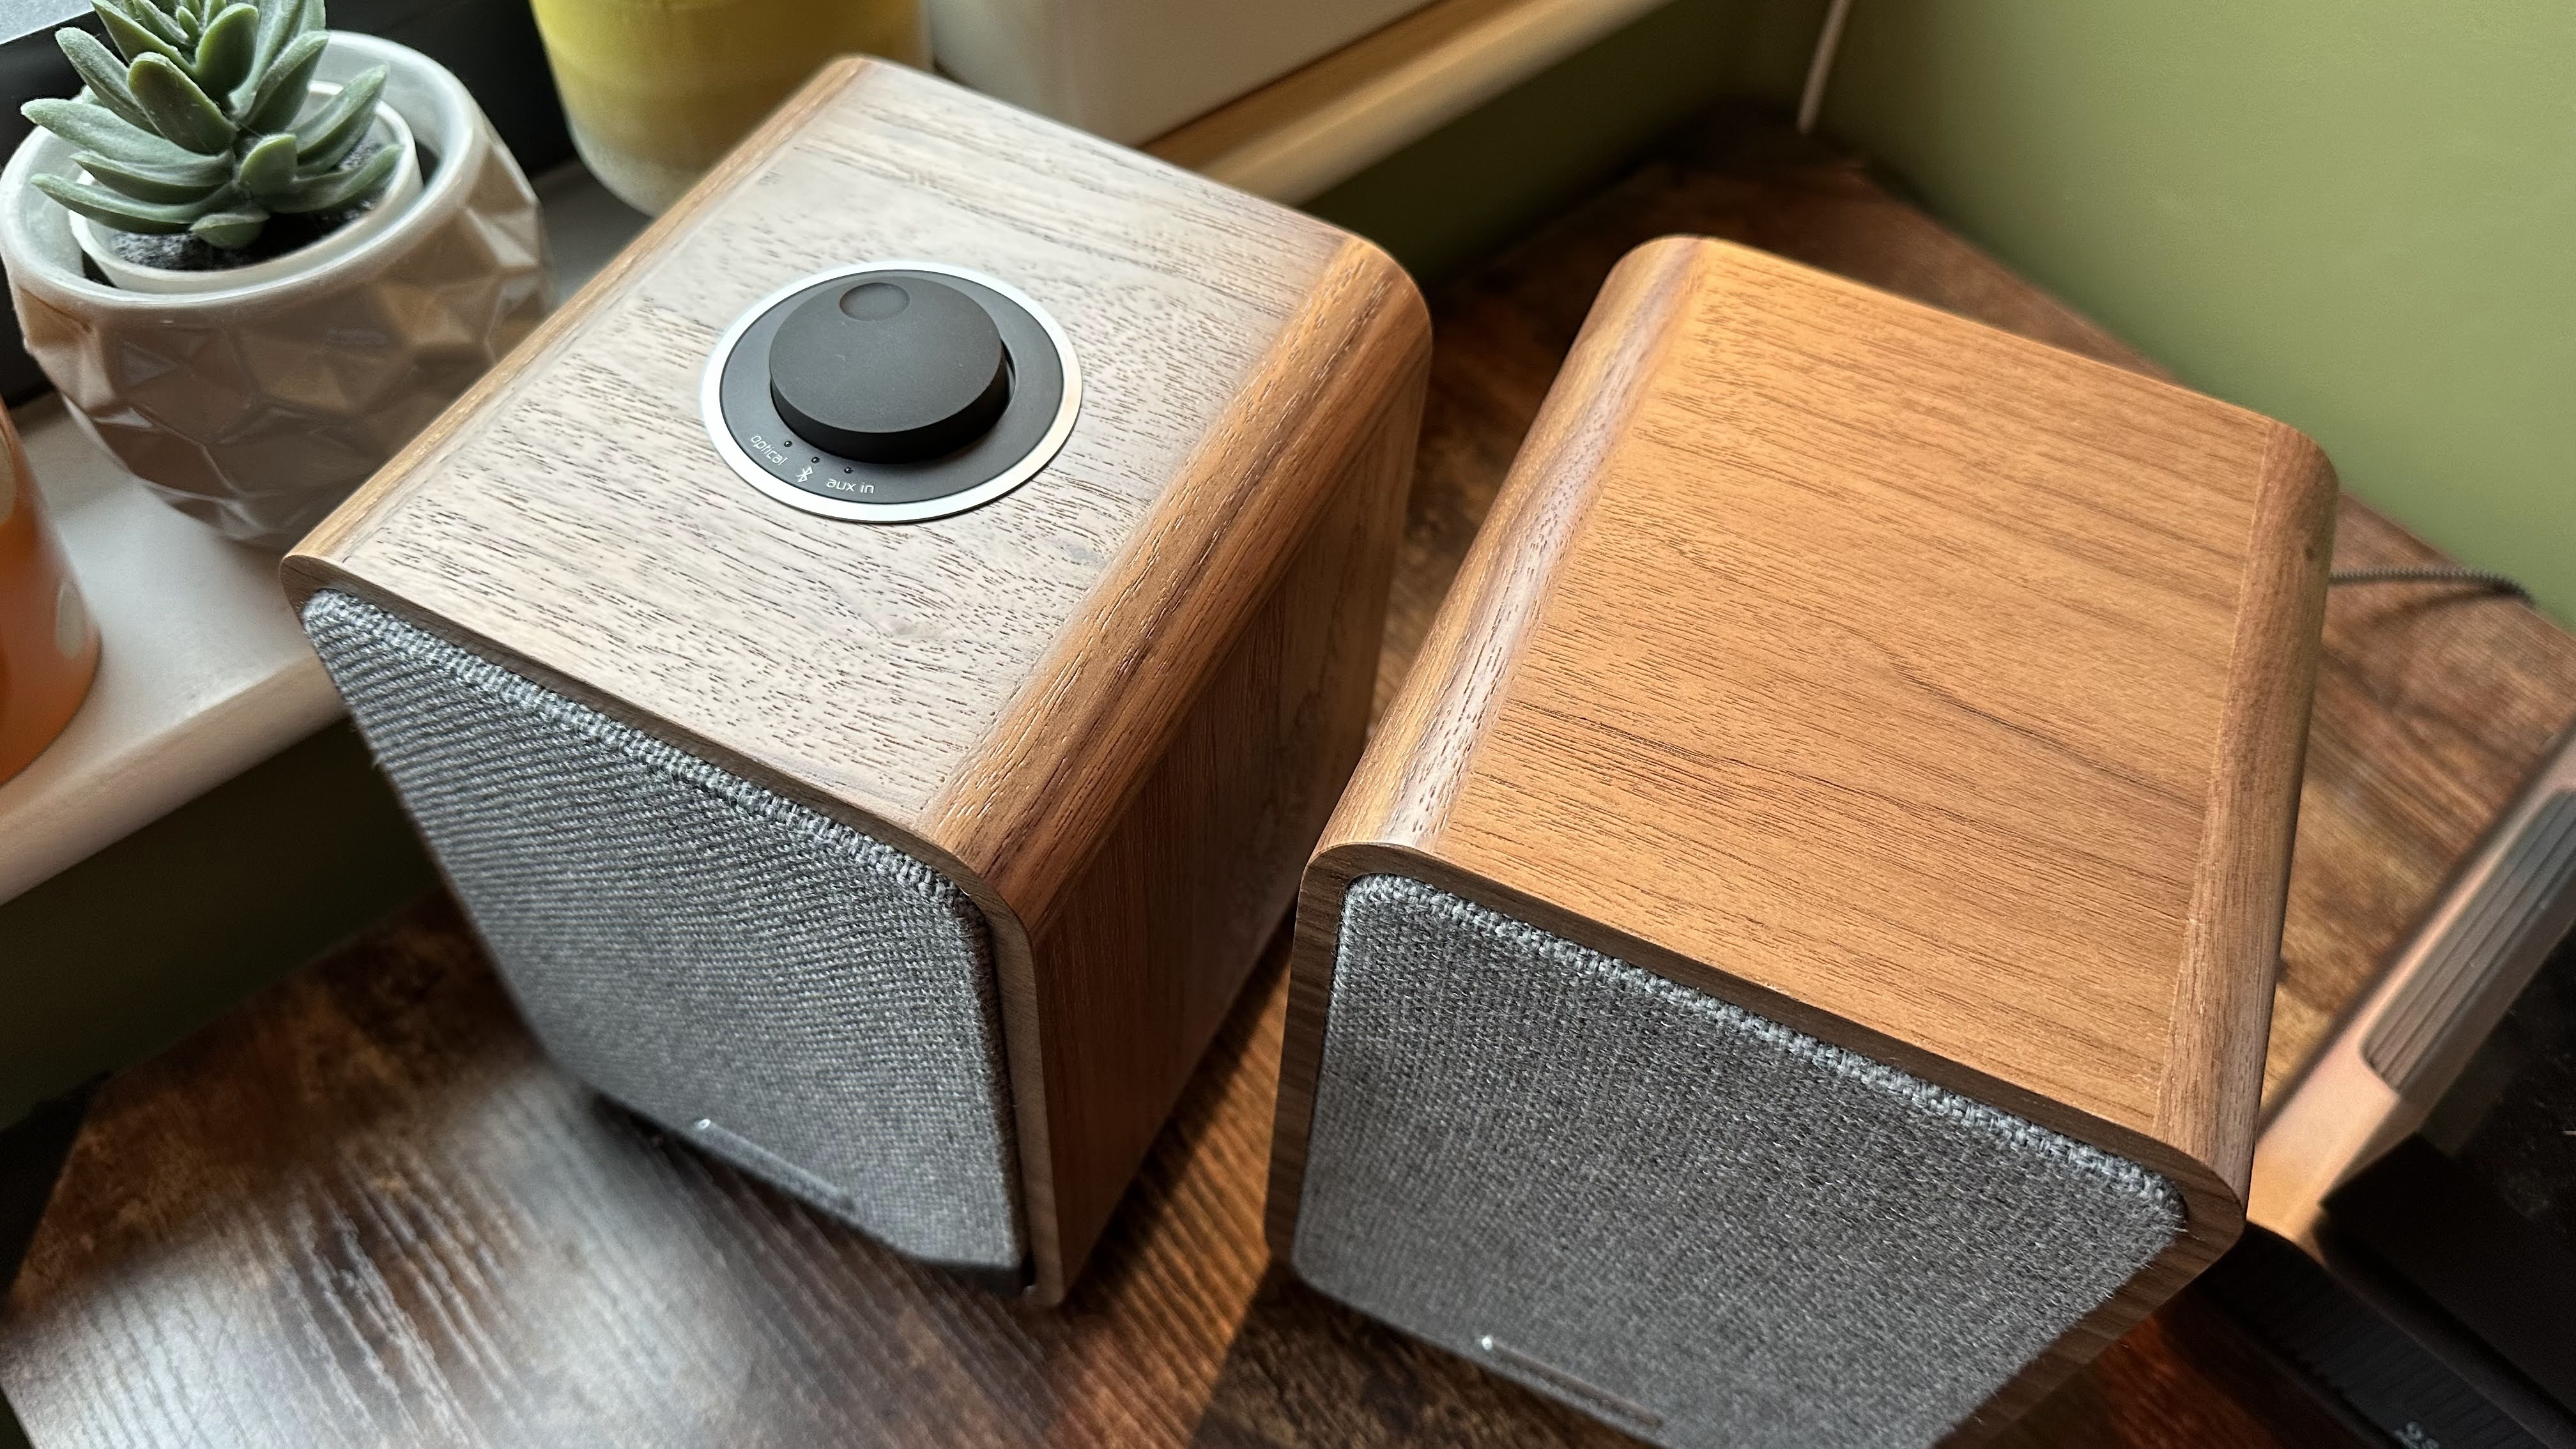 The Ruark Audio MR1 Mk2 speakers on a wooden desk.